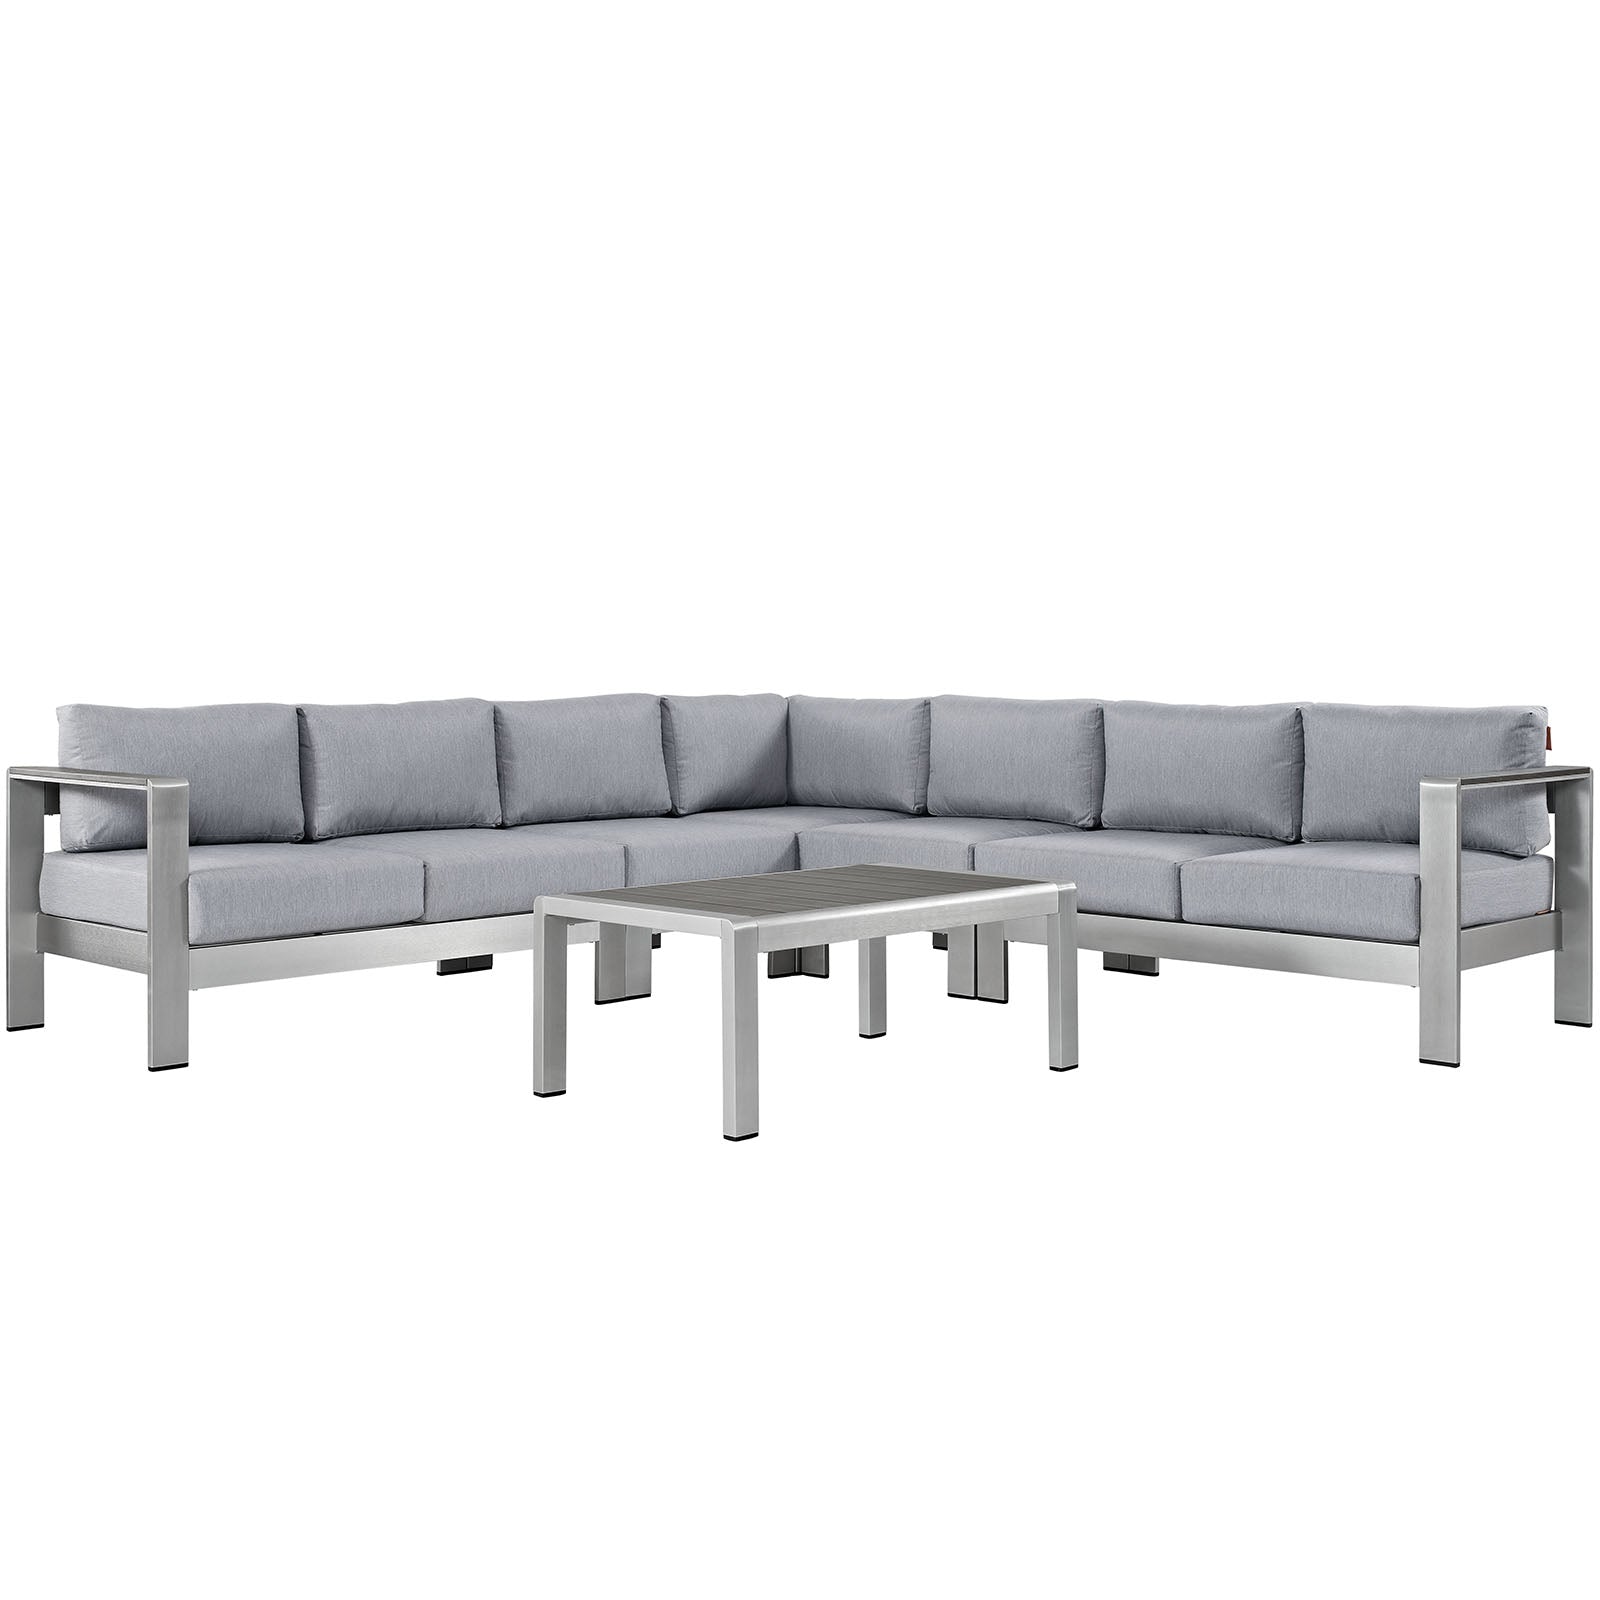 Shore 6 Piece Outdoor Patio Aluminum Sectional Sofa Set - Gray